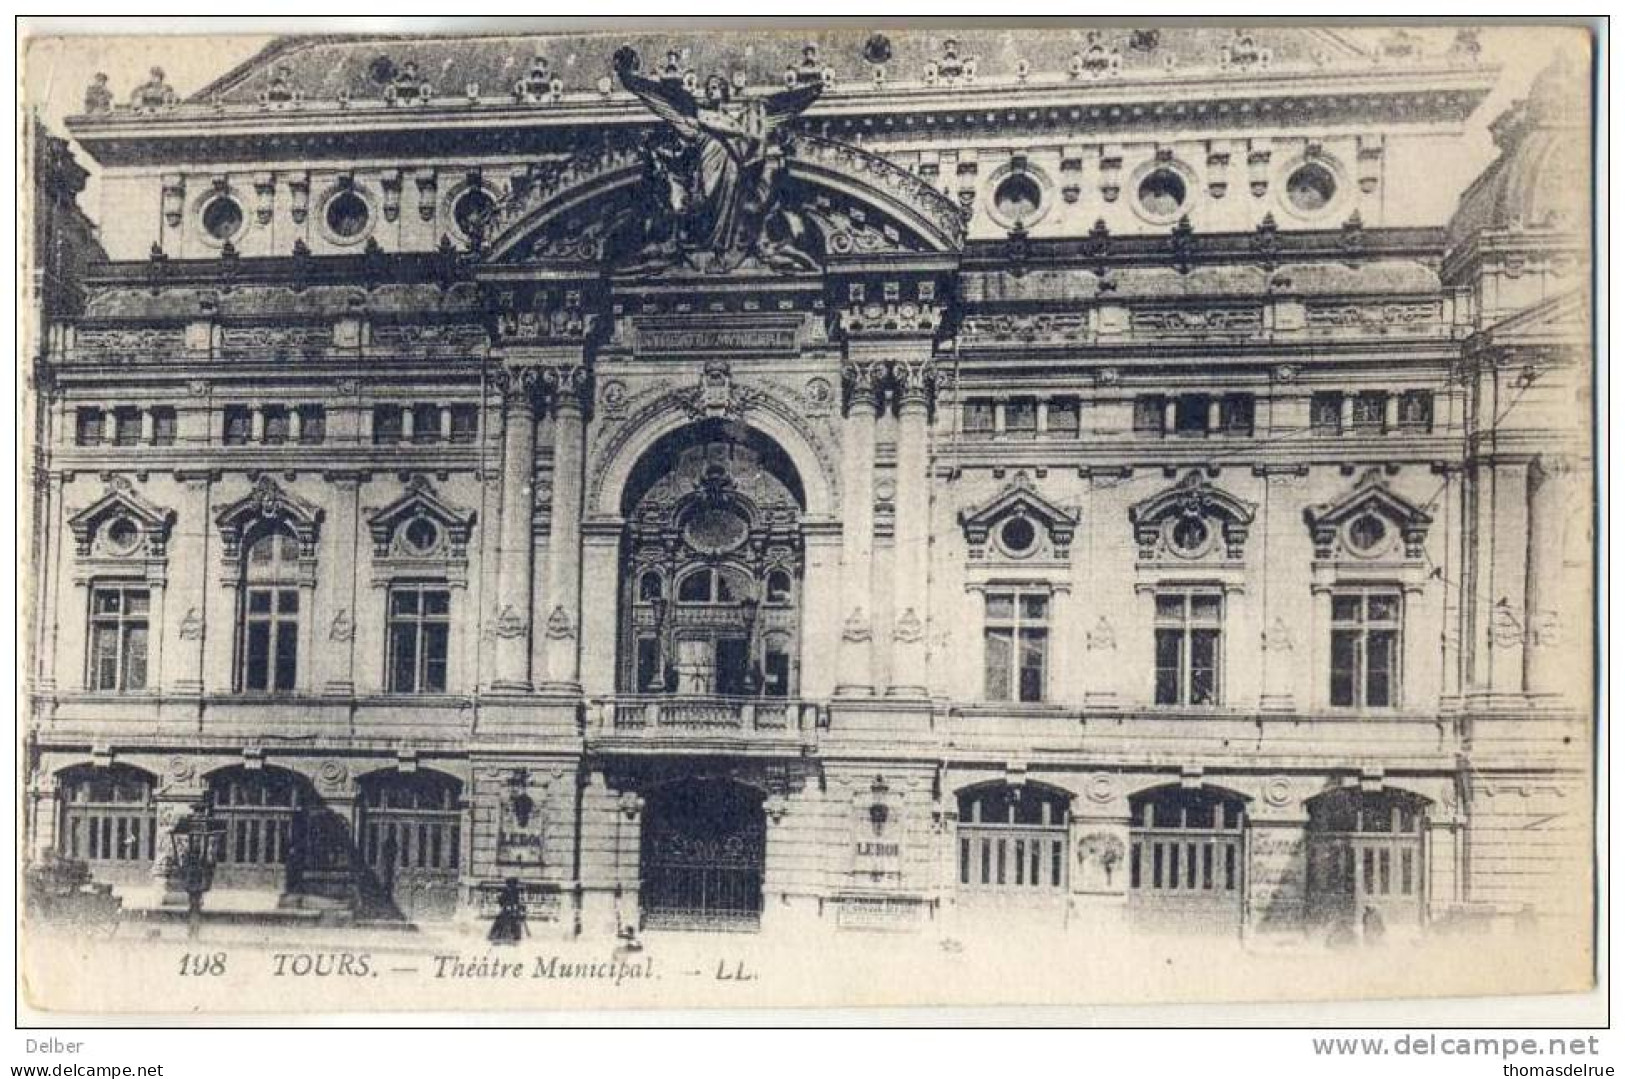 _G985: Carte Postale: 198- TOURS Théâtre Muncipal: 15c Semeuse: - AK: ROUSBRUGGE-HARINGHE 16 XI.1917 - Unbesetzte Zone